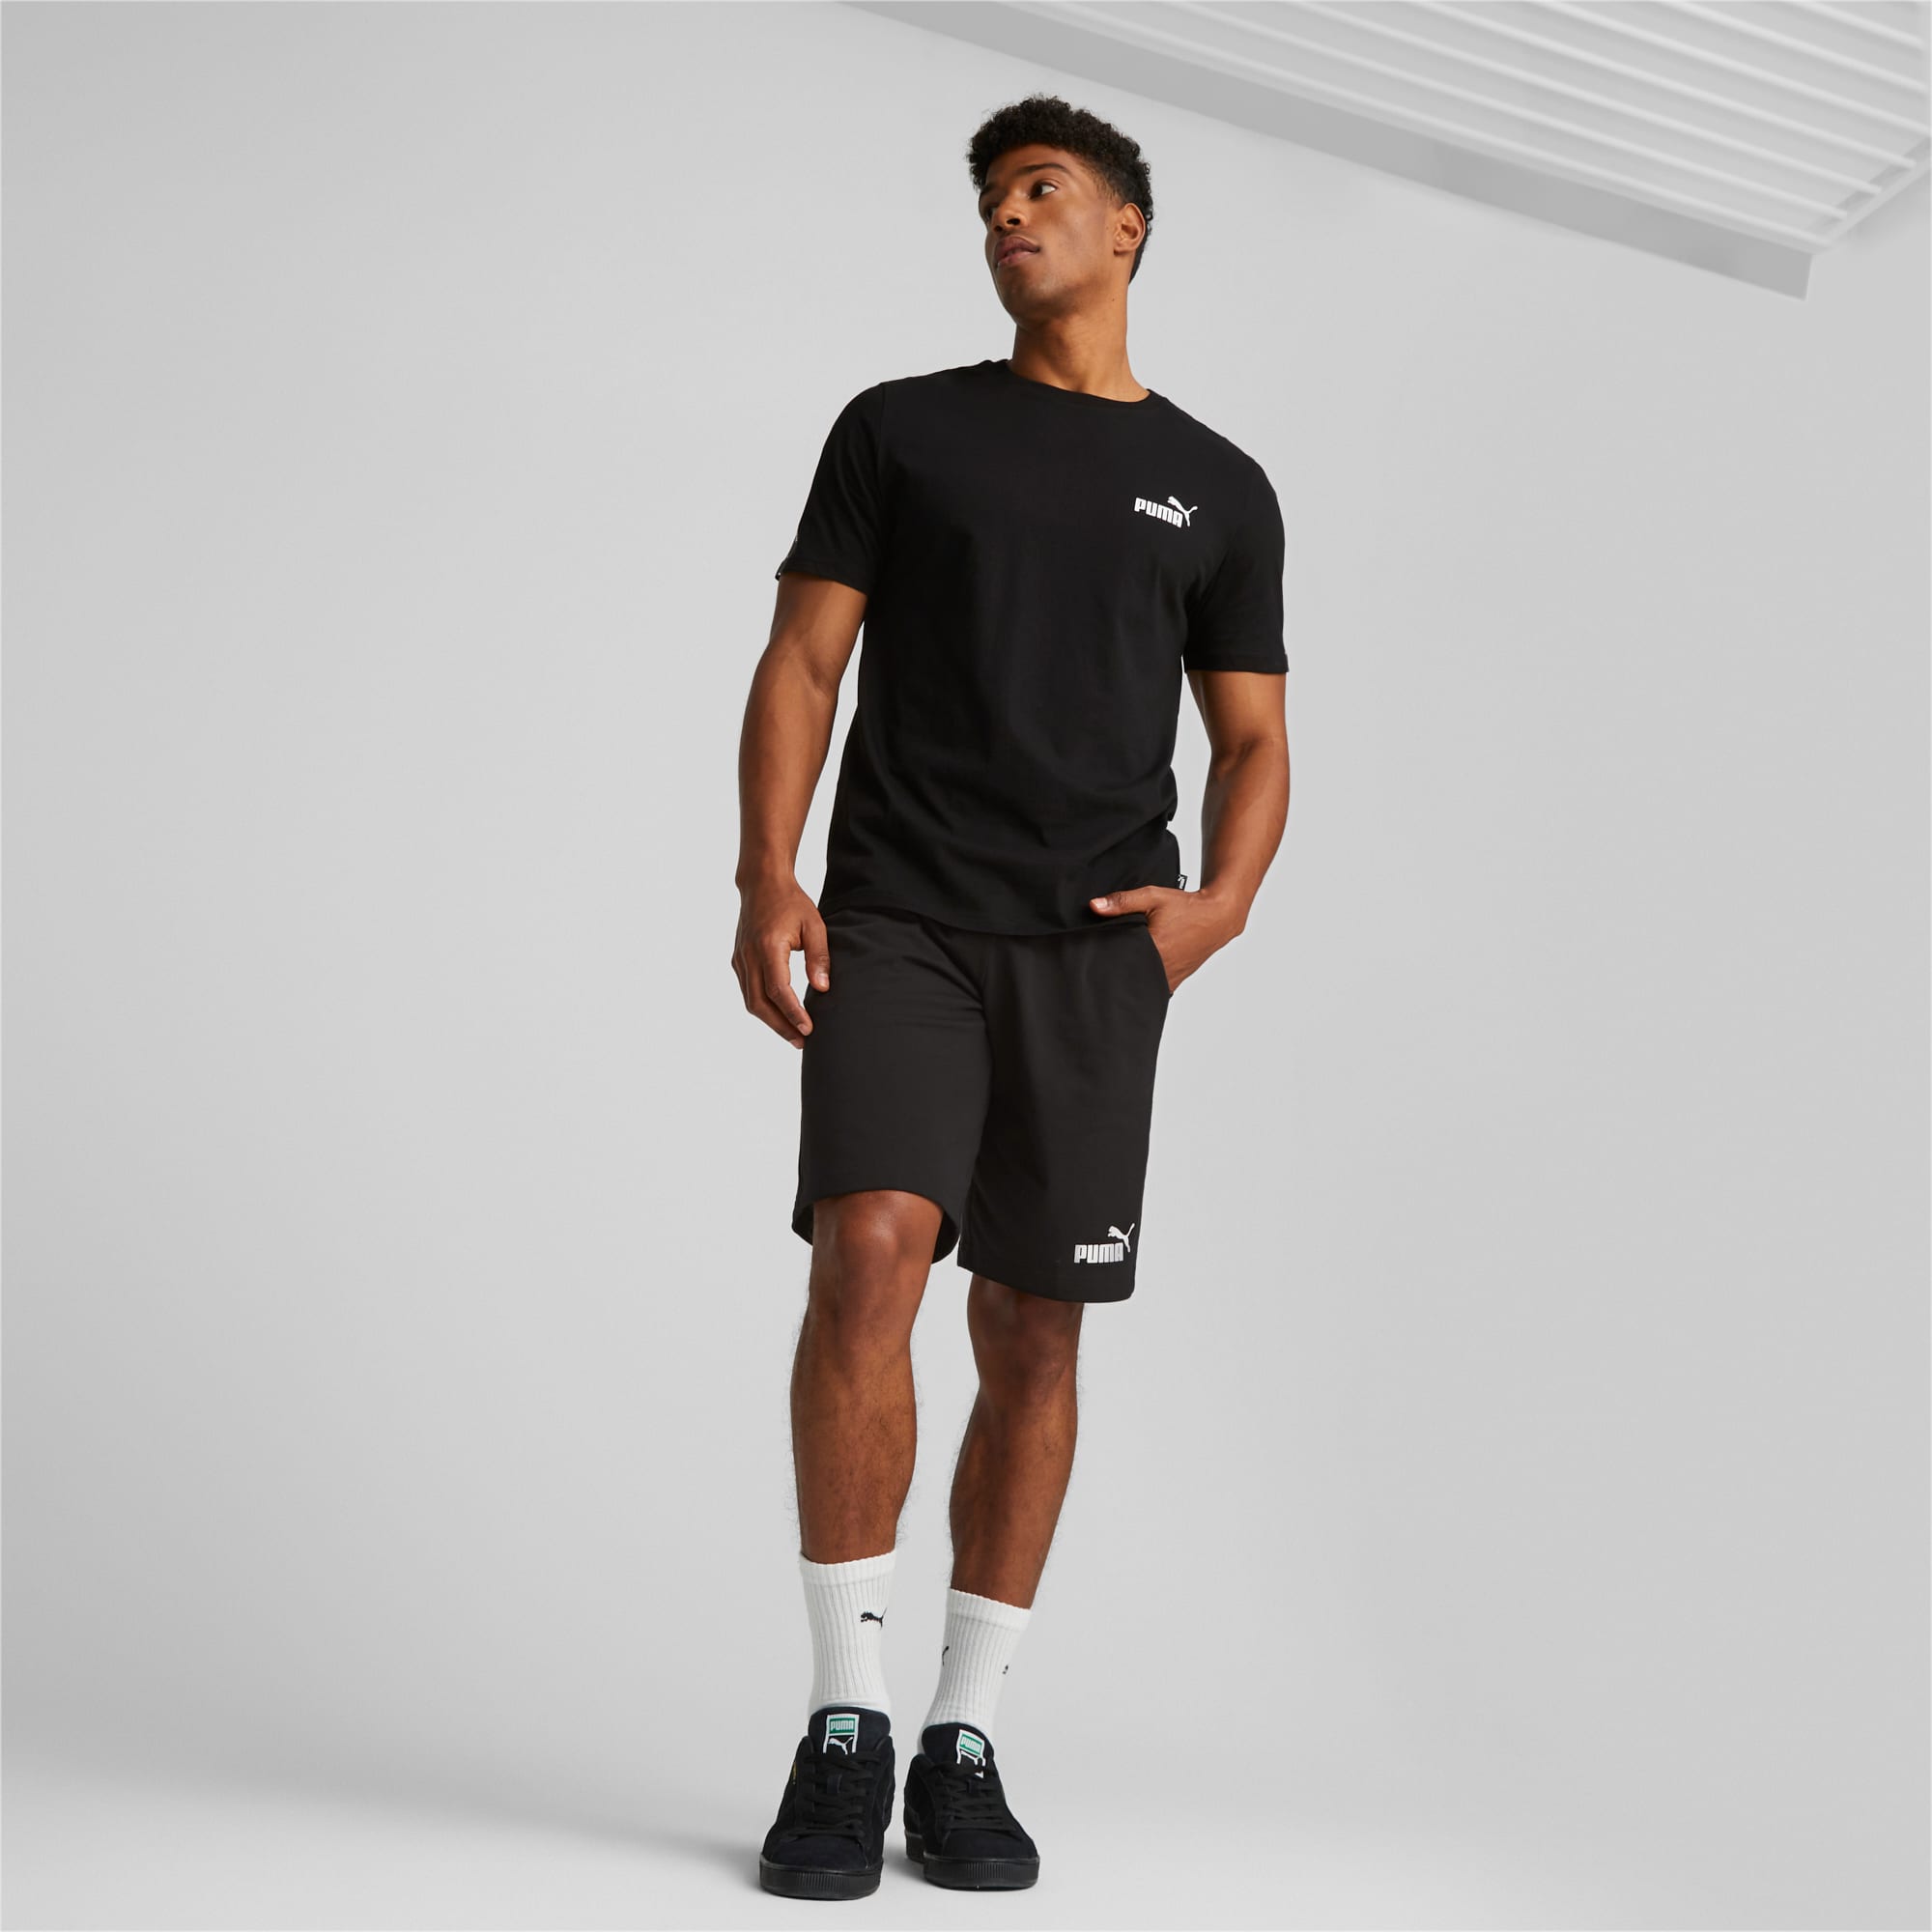 PUMA Essentials Jersey Men's Shorts, Black, Size XS, Clothing